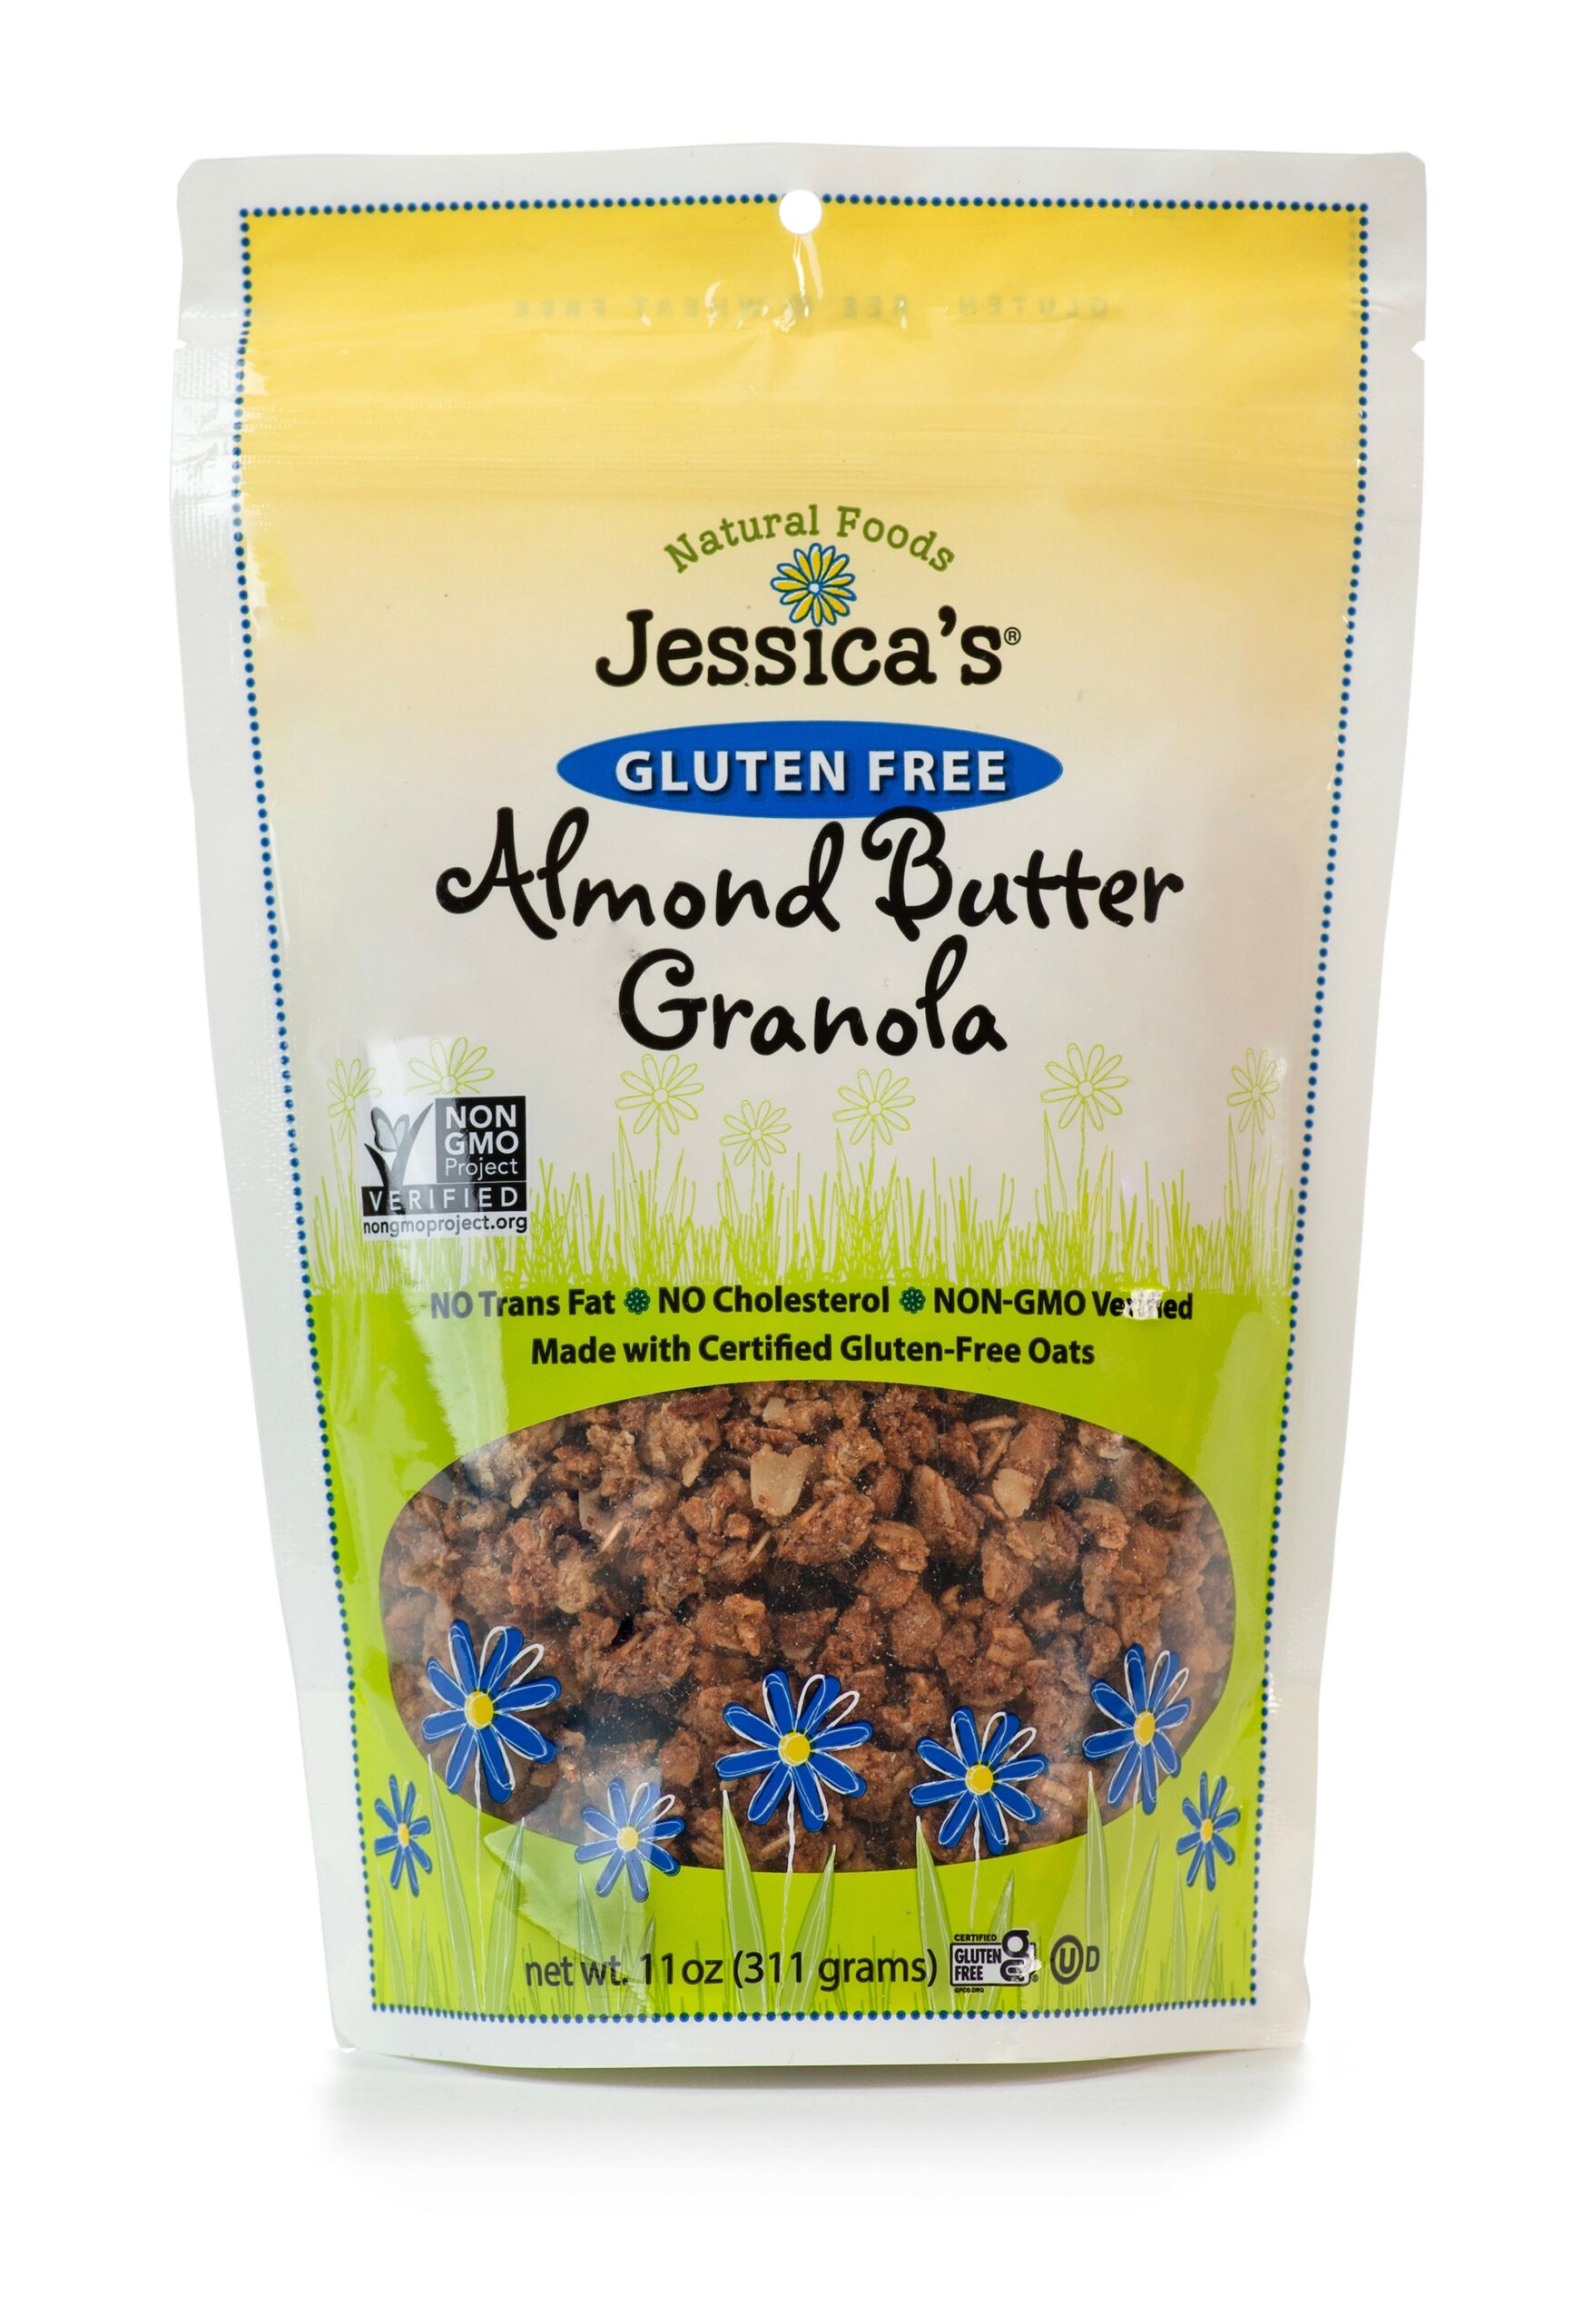 Almond Butter Granola